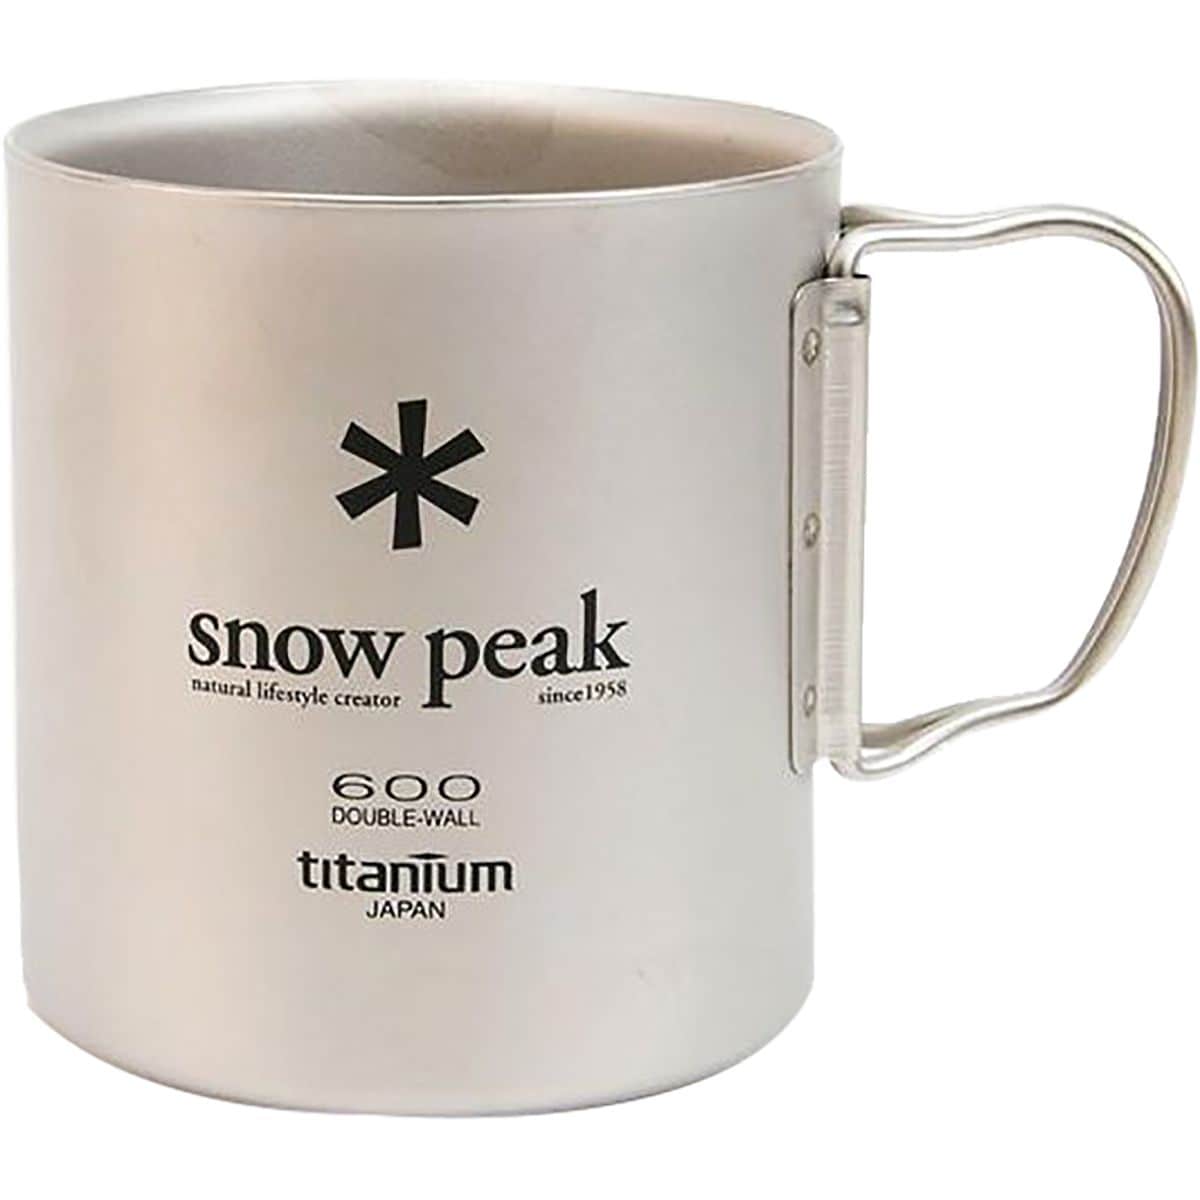 Snow Peak Titanium Double Wall Cup 600